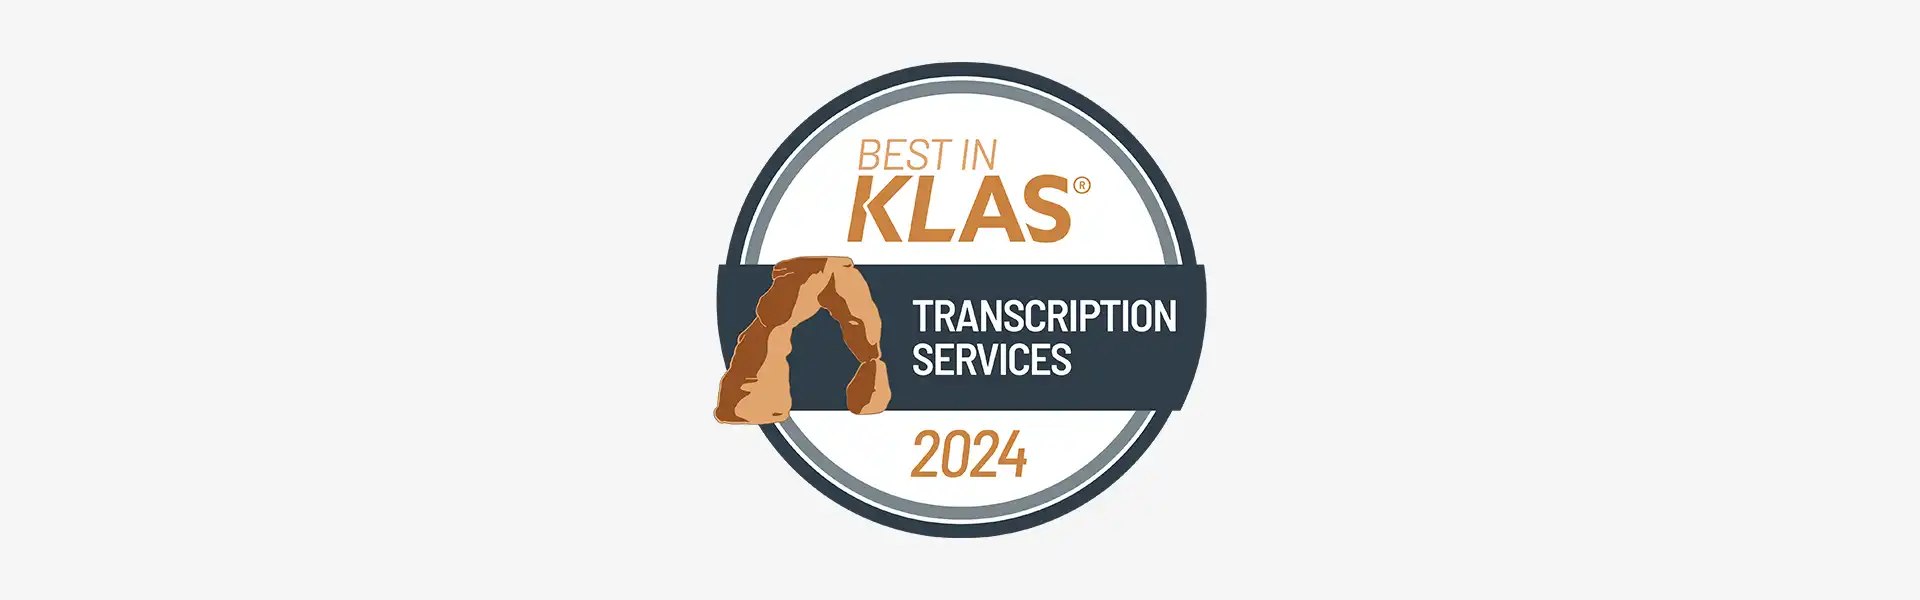 AQuity Best in KLAS for Transcription 2024